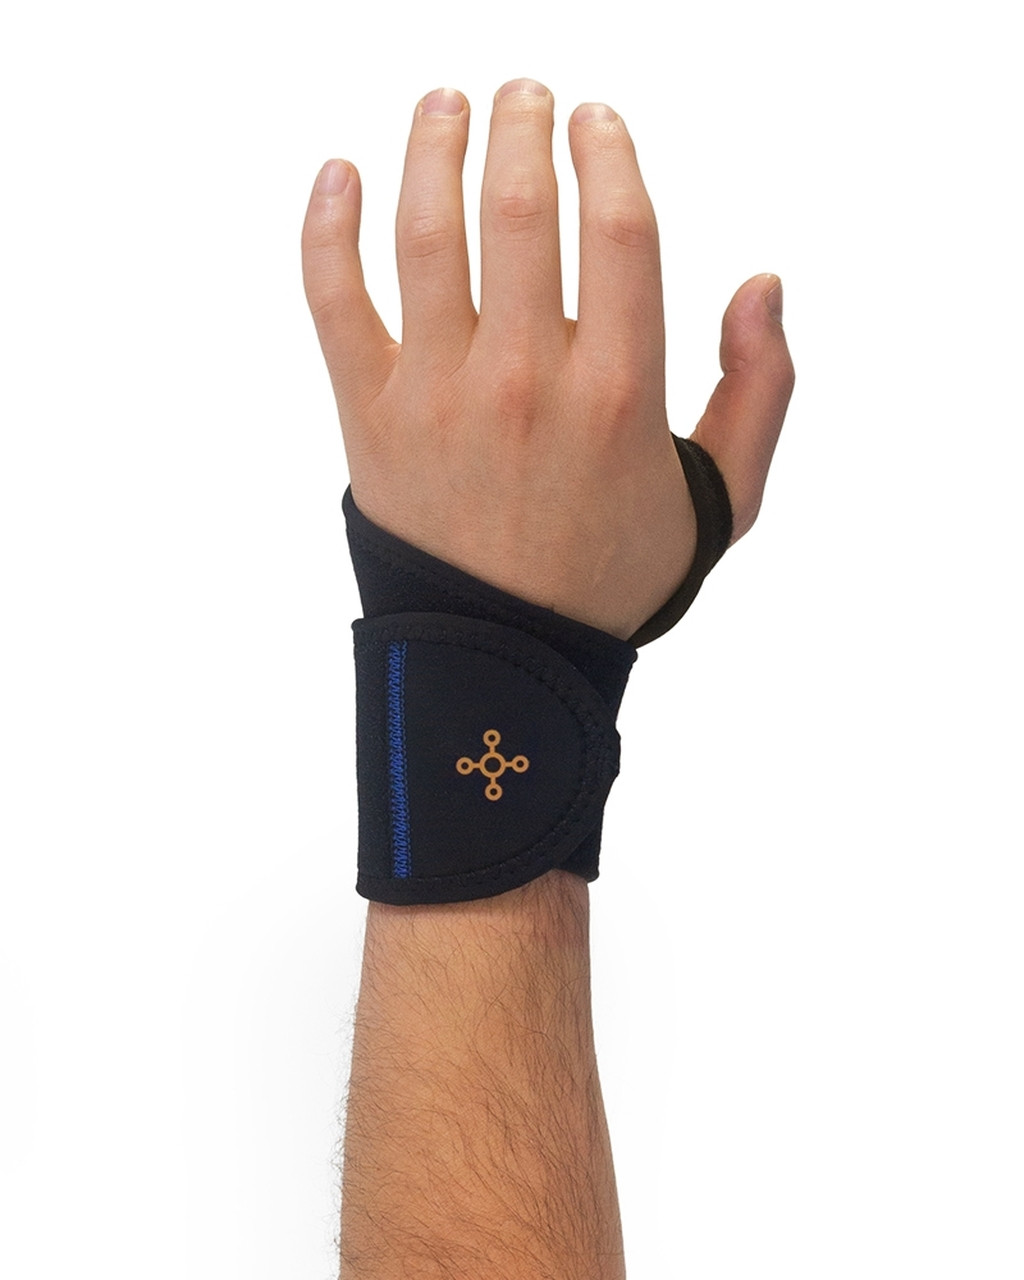  ComfyBrace Copper Infused Wrist Brace/Hand Brace/Wrist